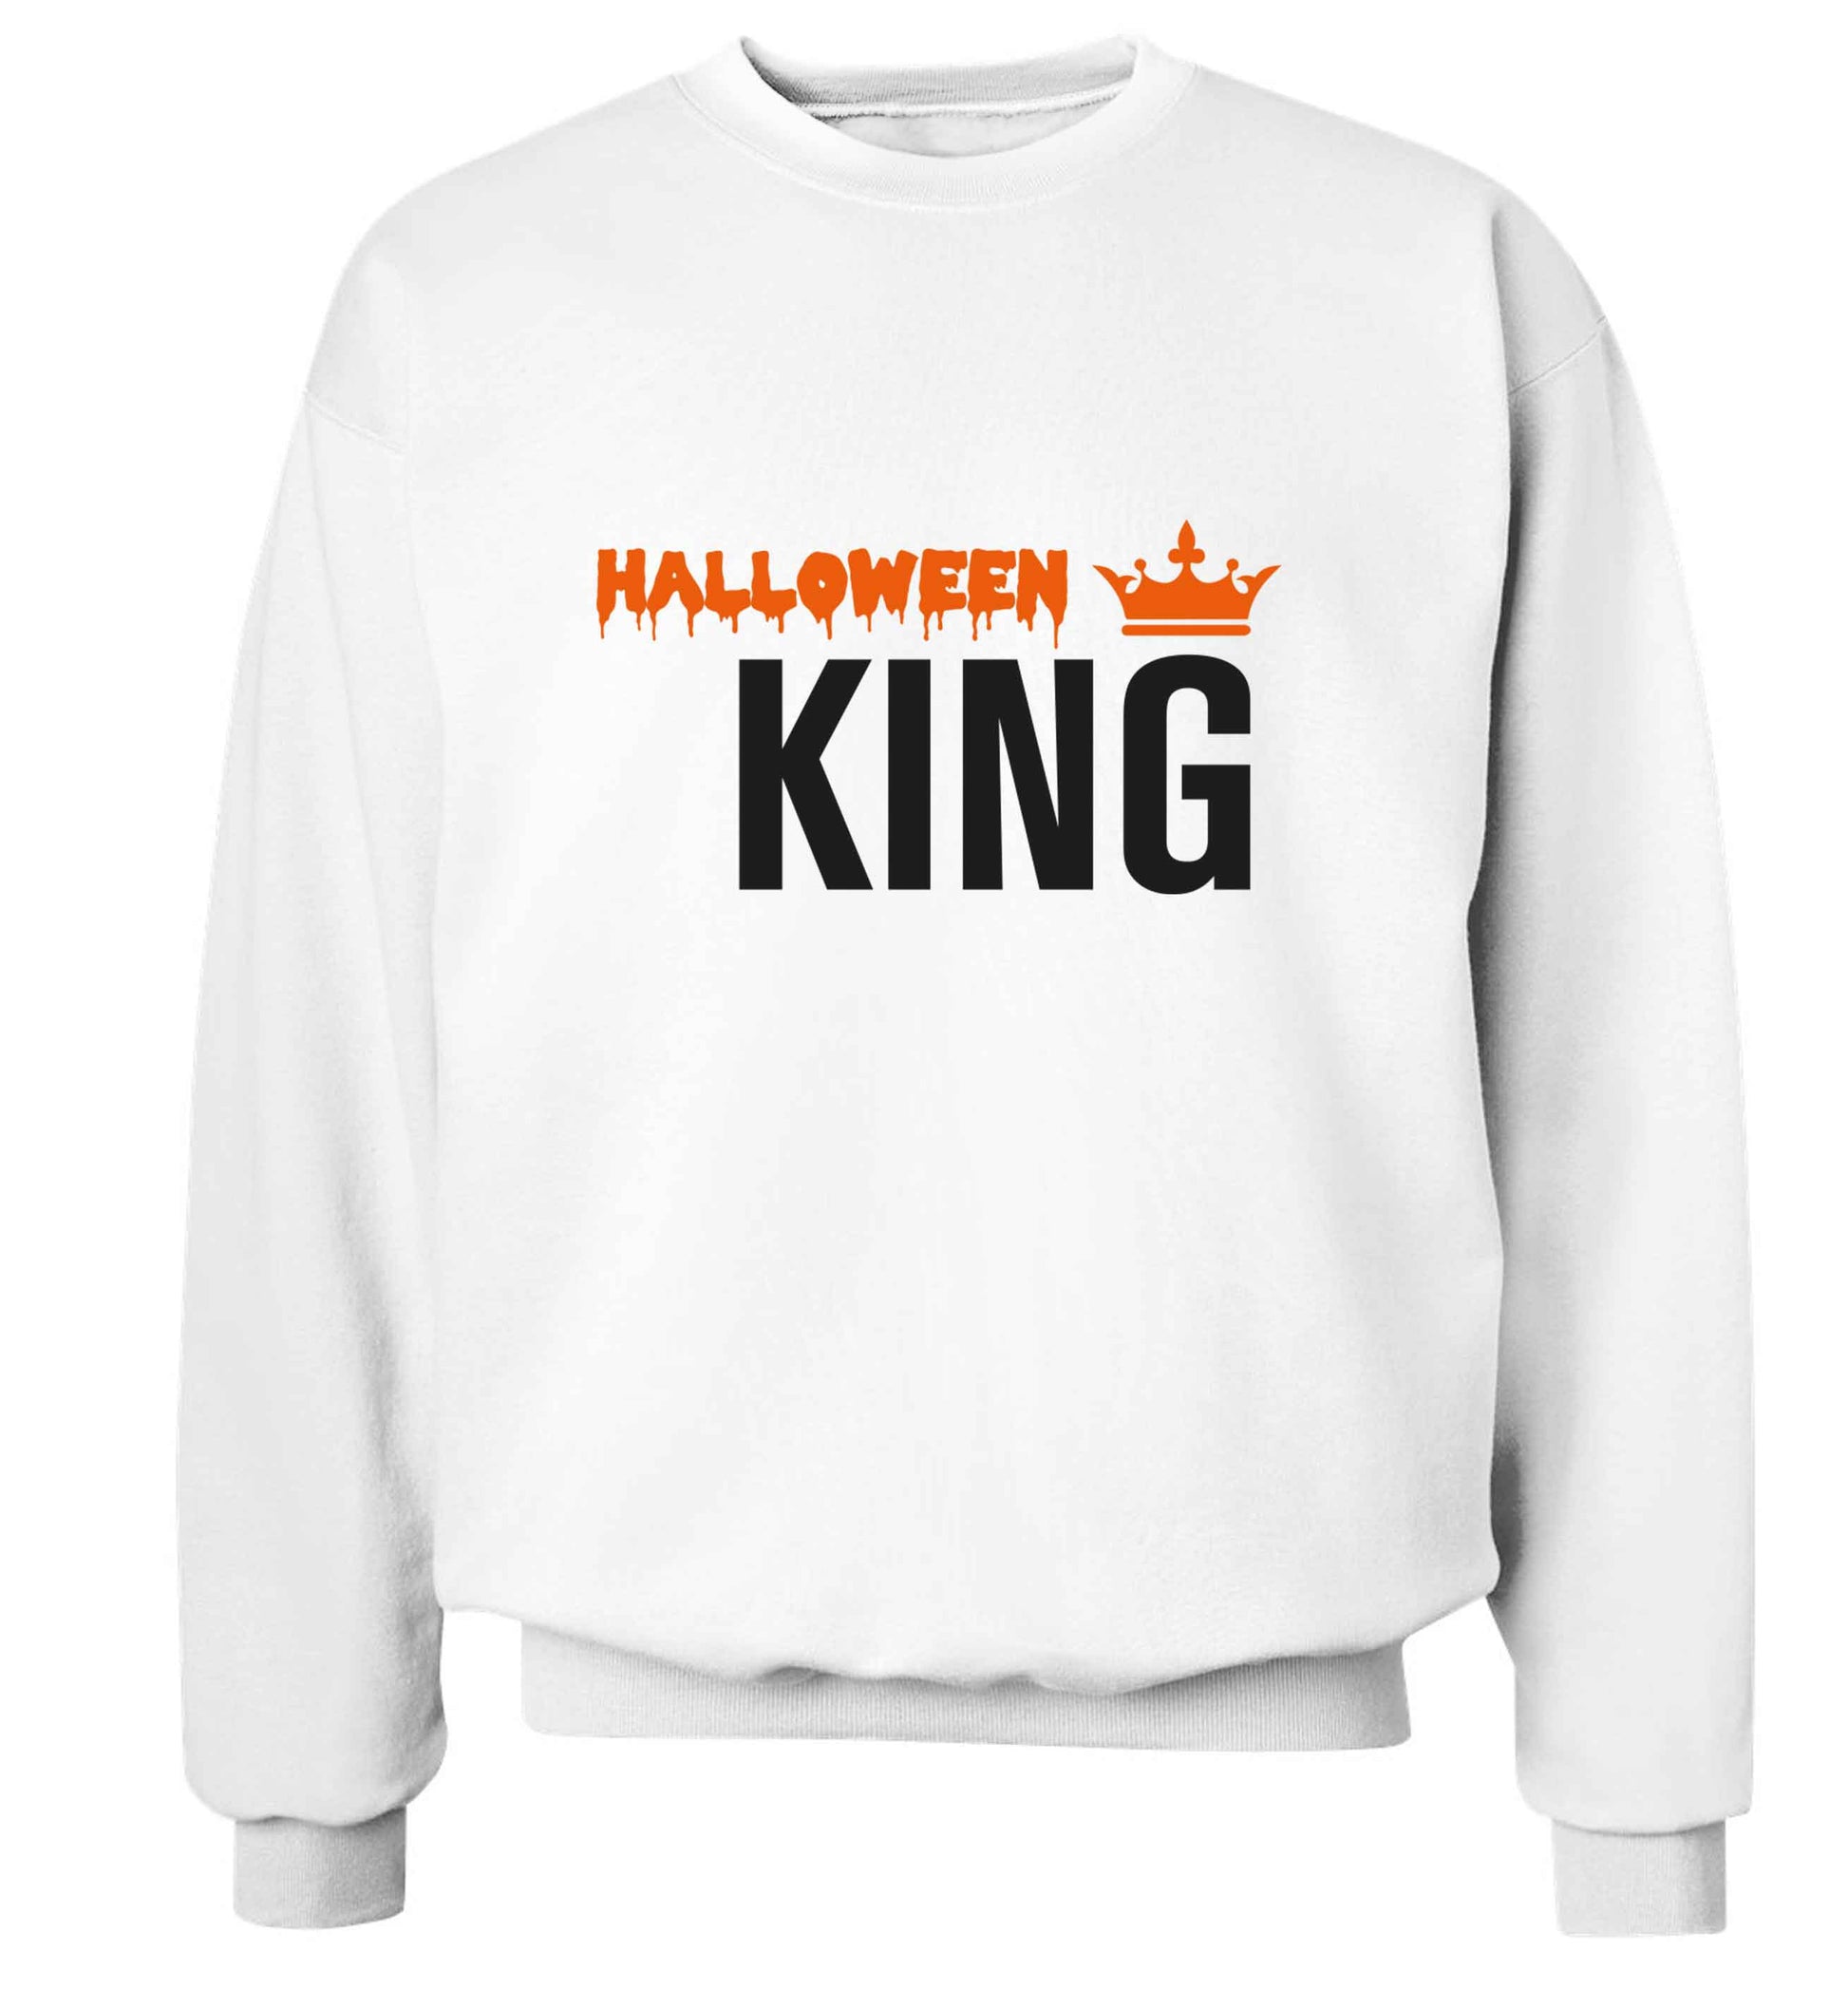 Halloween king adult's unisex white sweater 2XL